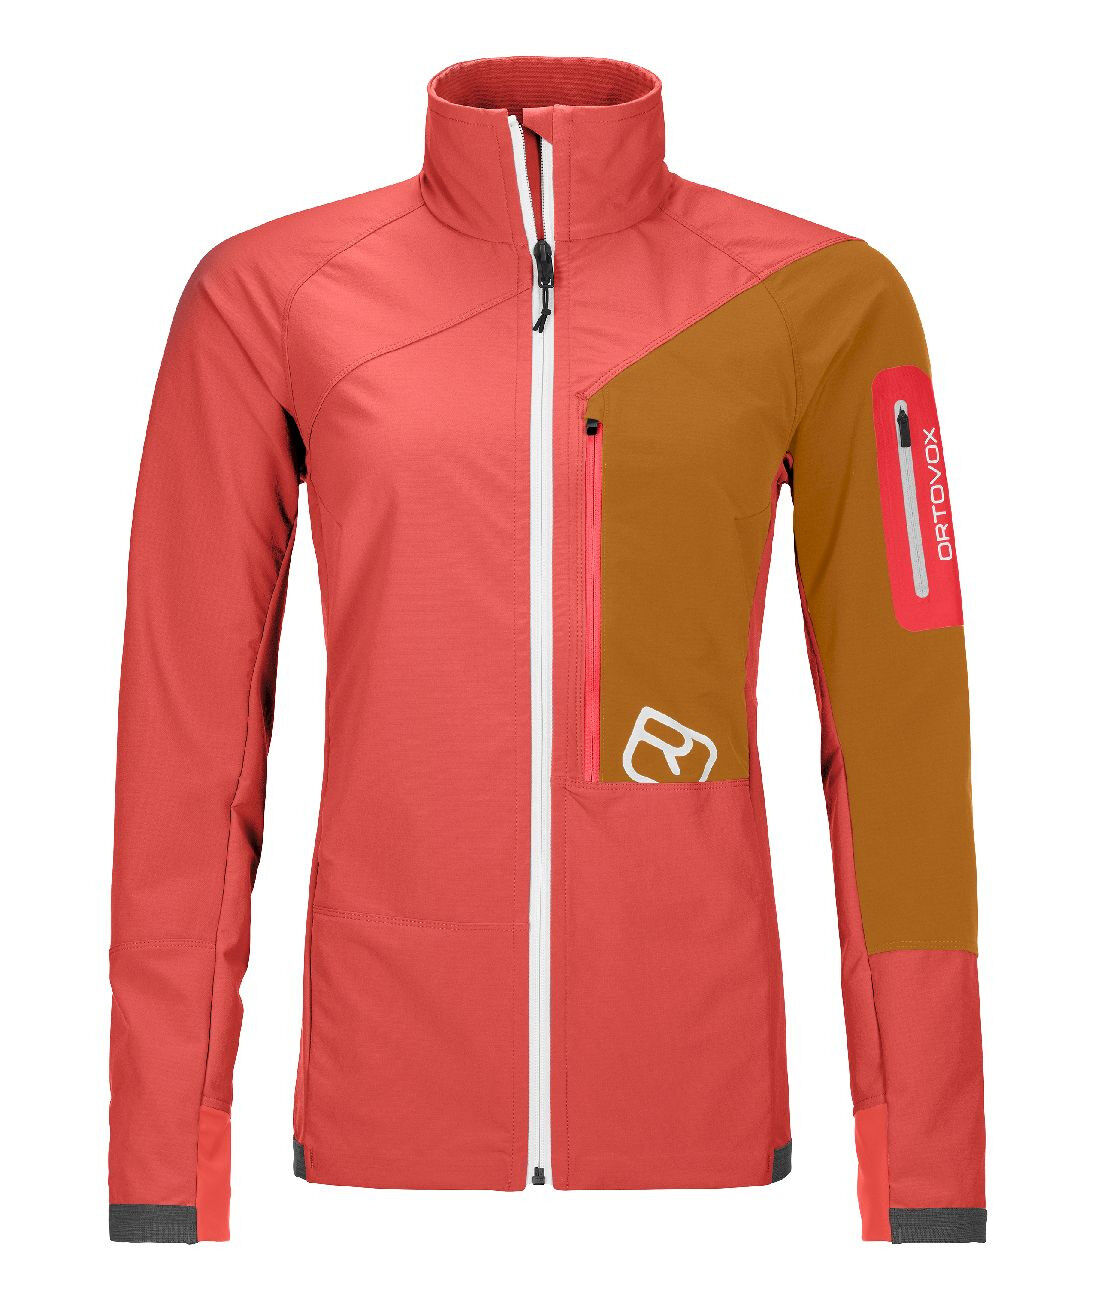 Ortovox Berrino Jacket - Softshell jacket - Women's